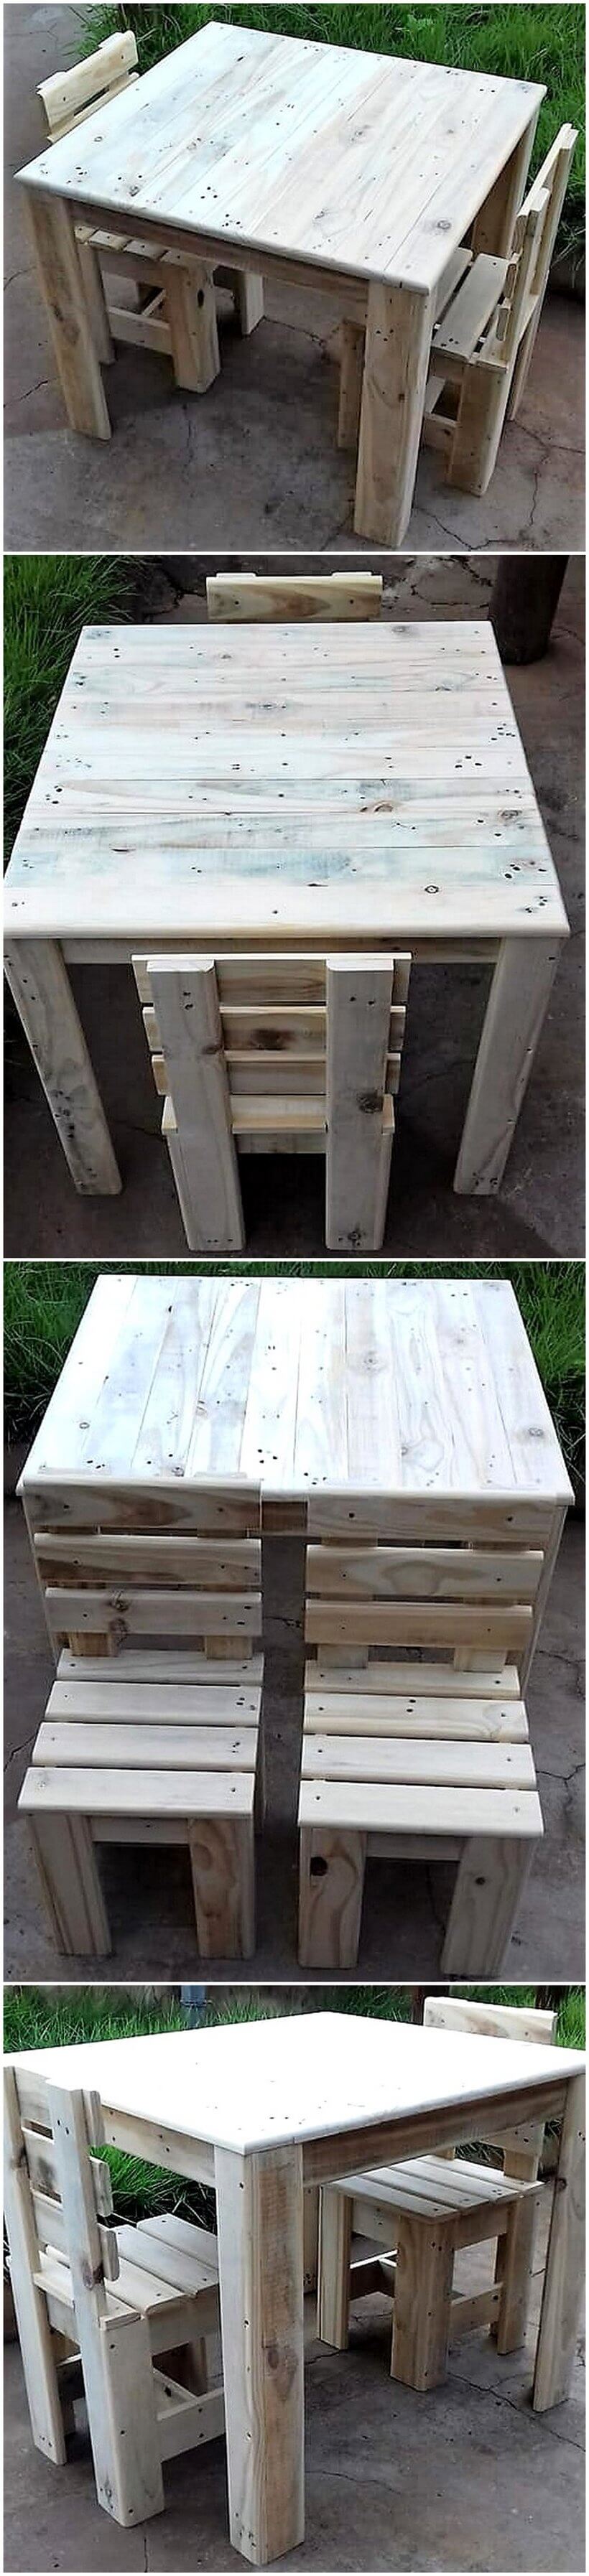 repurposed wooden pallet furniture set